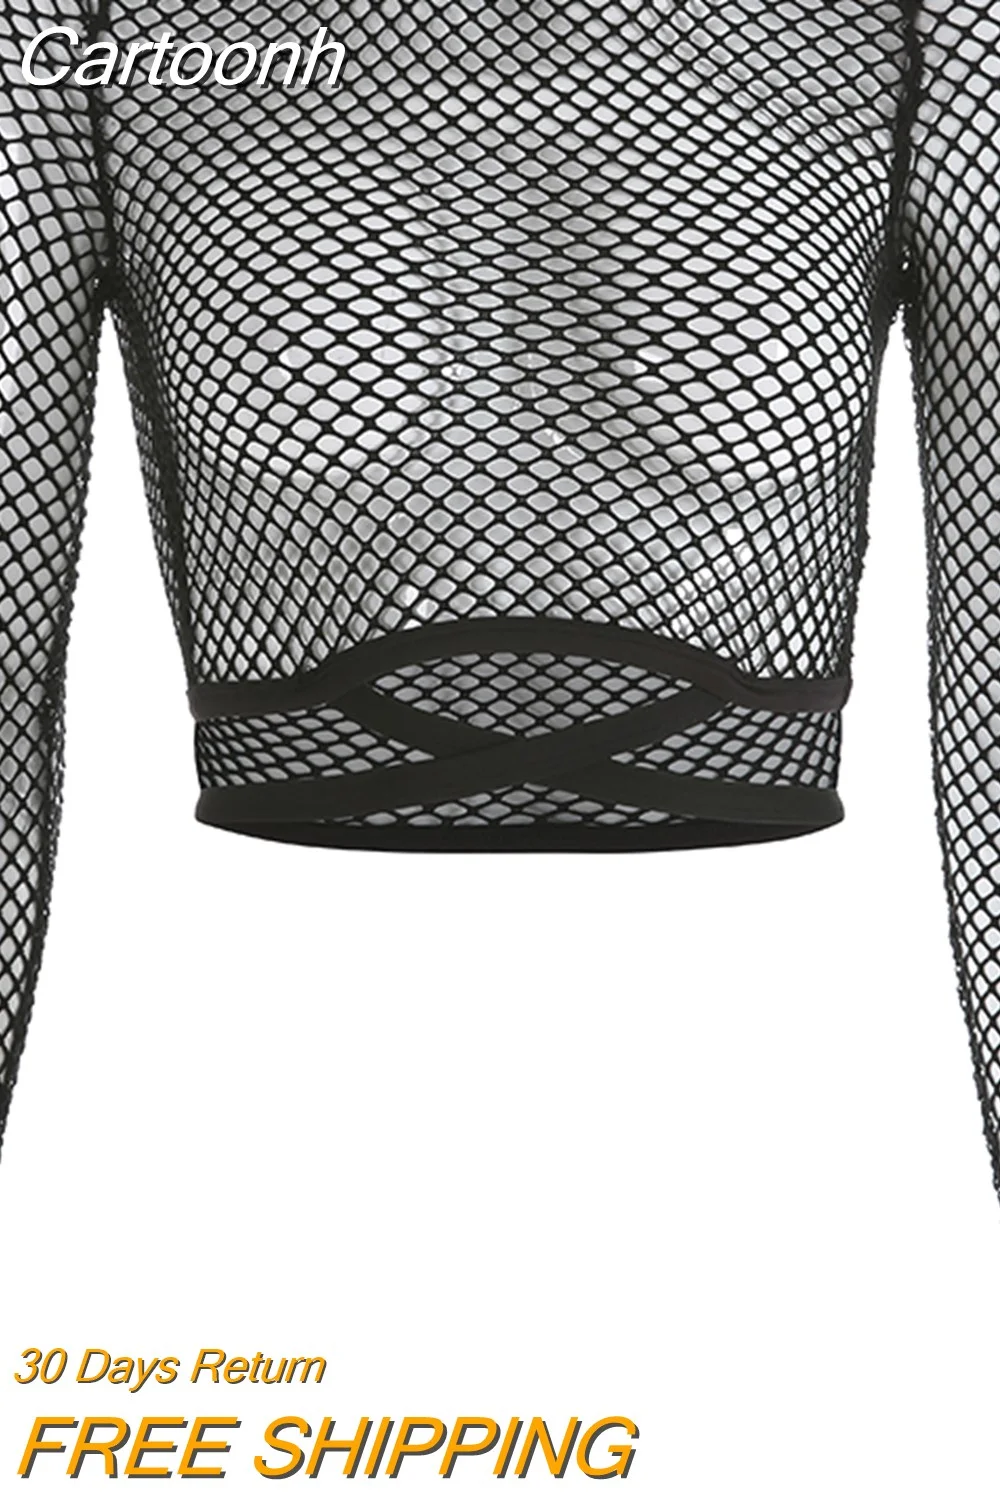 Cartoonh Fashion black long sleeve t shirt women mesh top crop tee see-through sexy lace up casual summer t-shirts 2023 tshirt